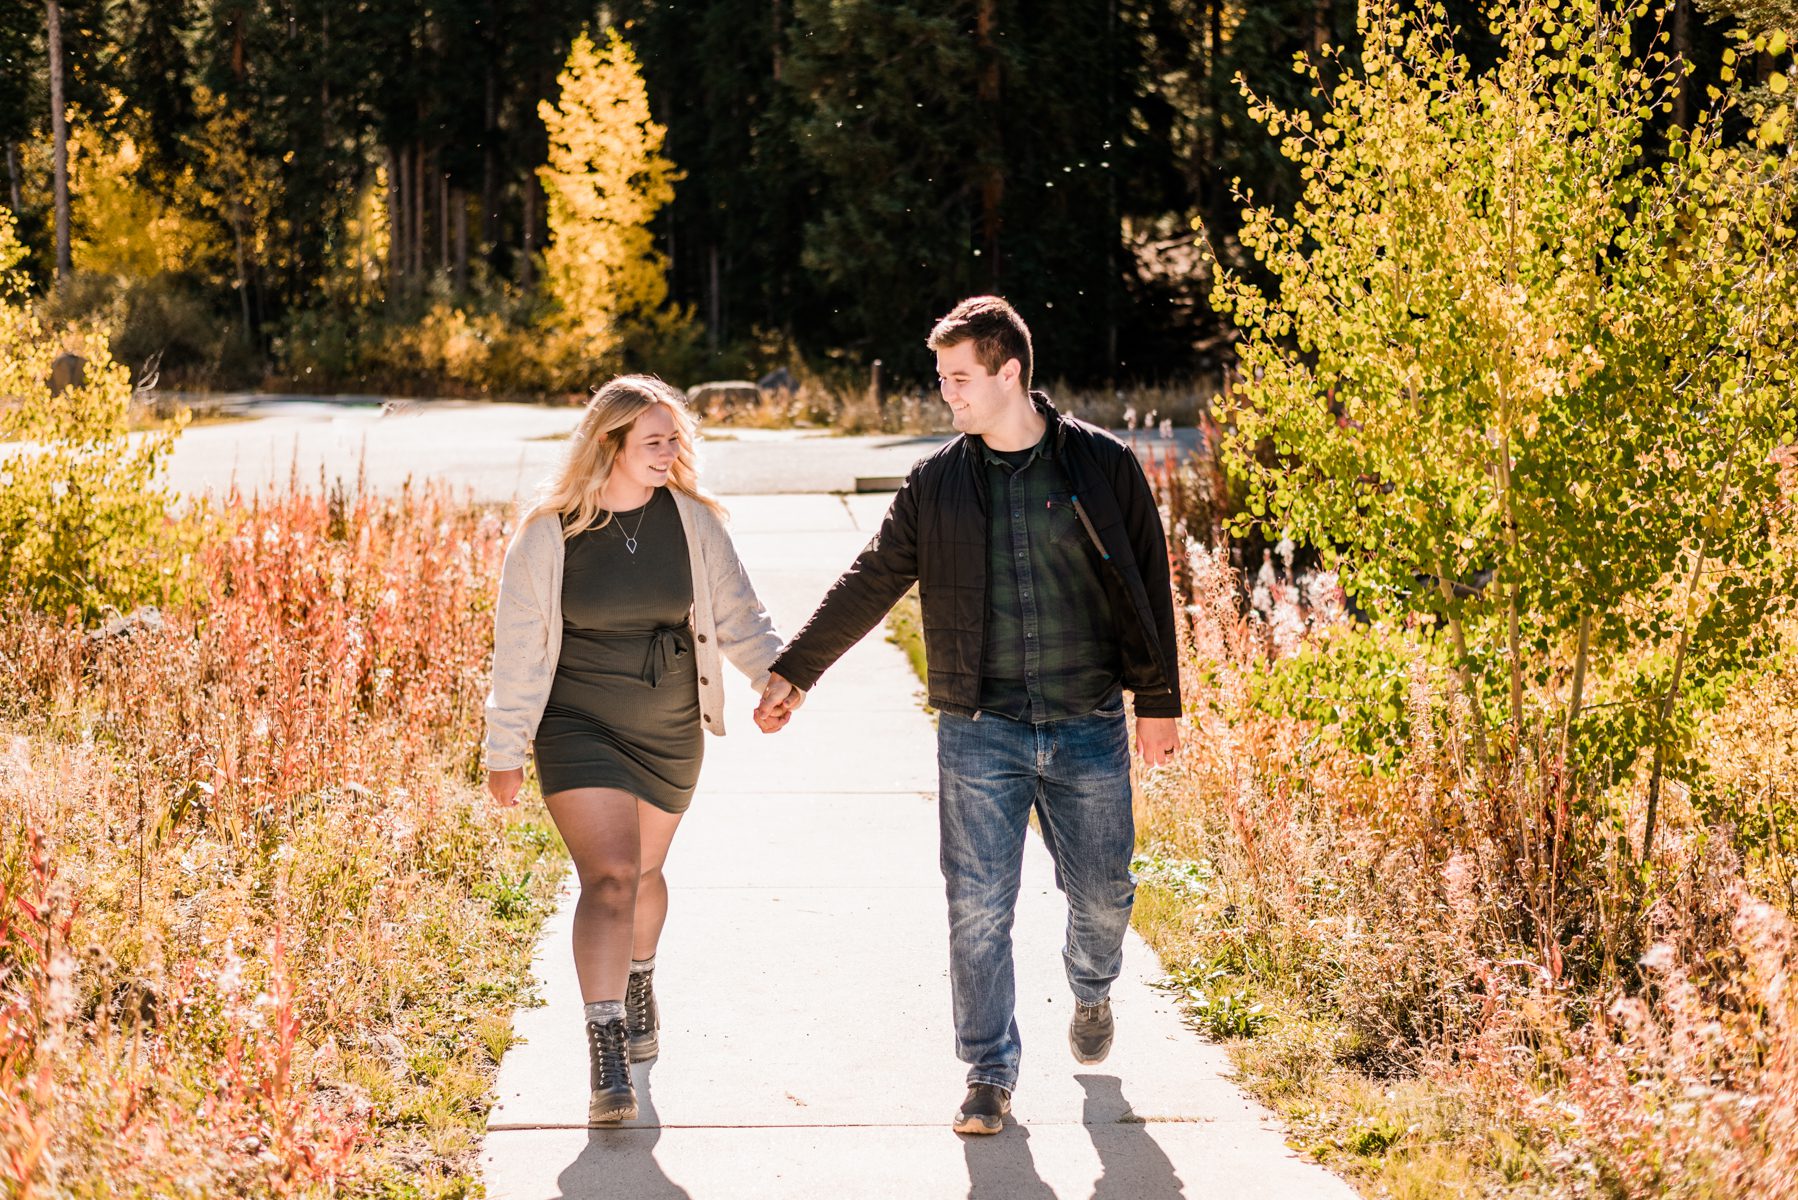 Danielle & Brendan | Fall Engagement Photos on the Grand Mesa